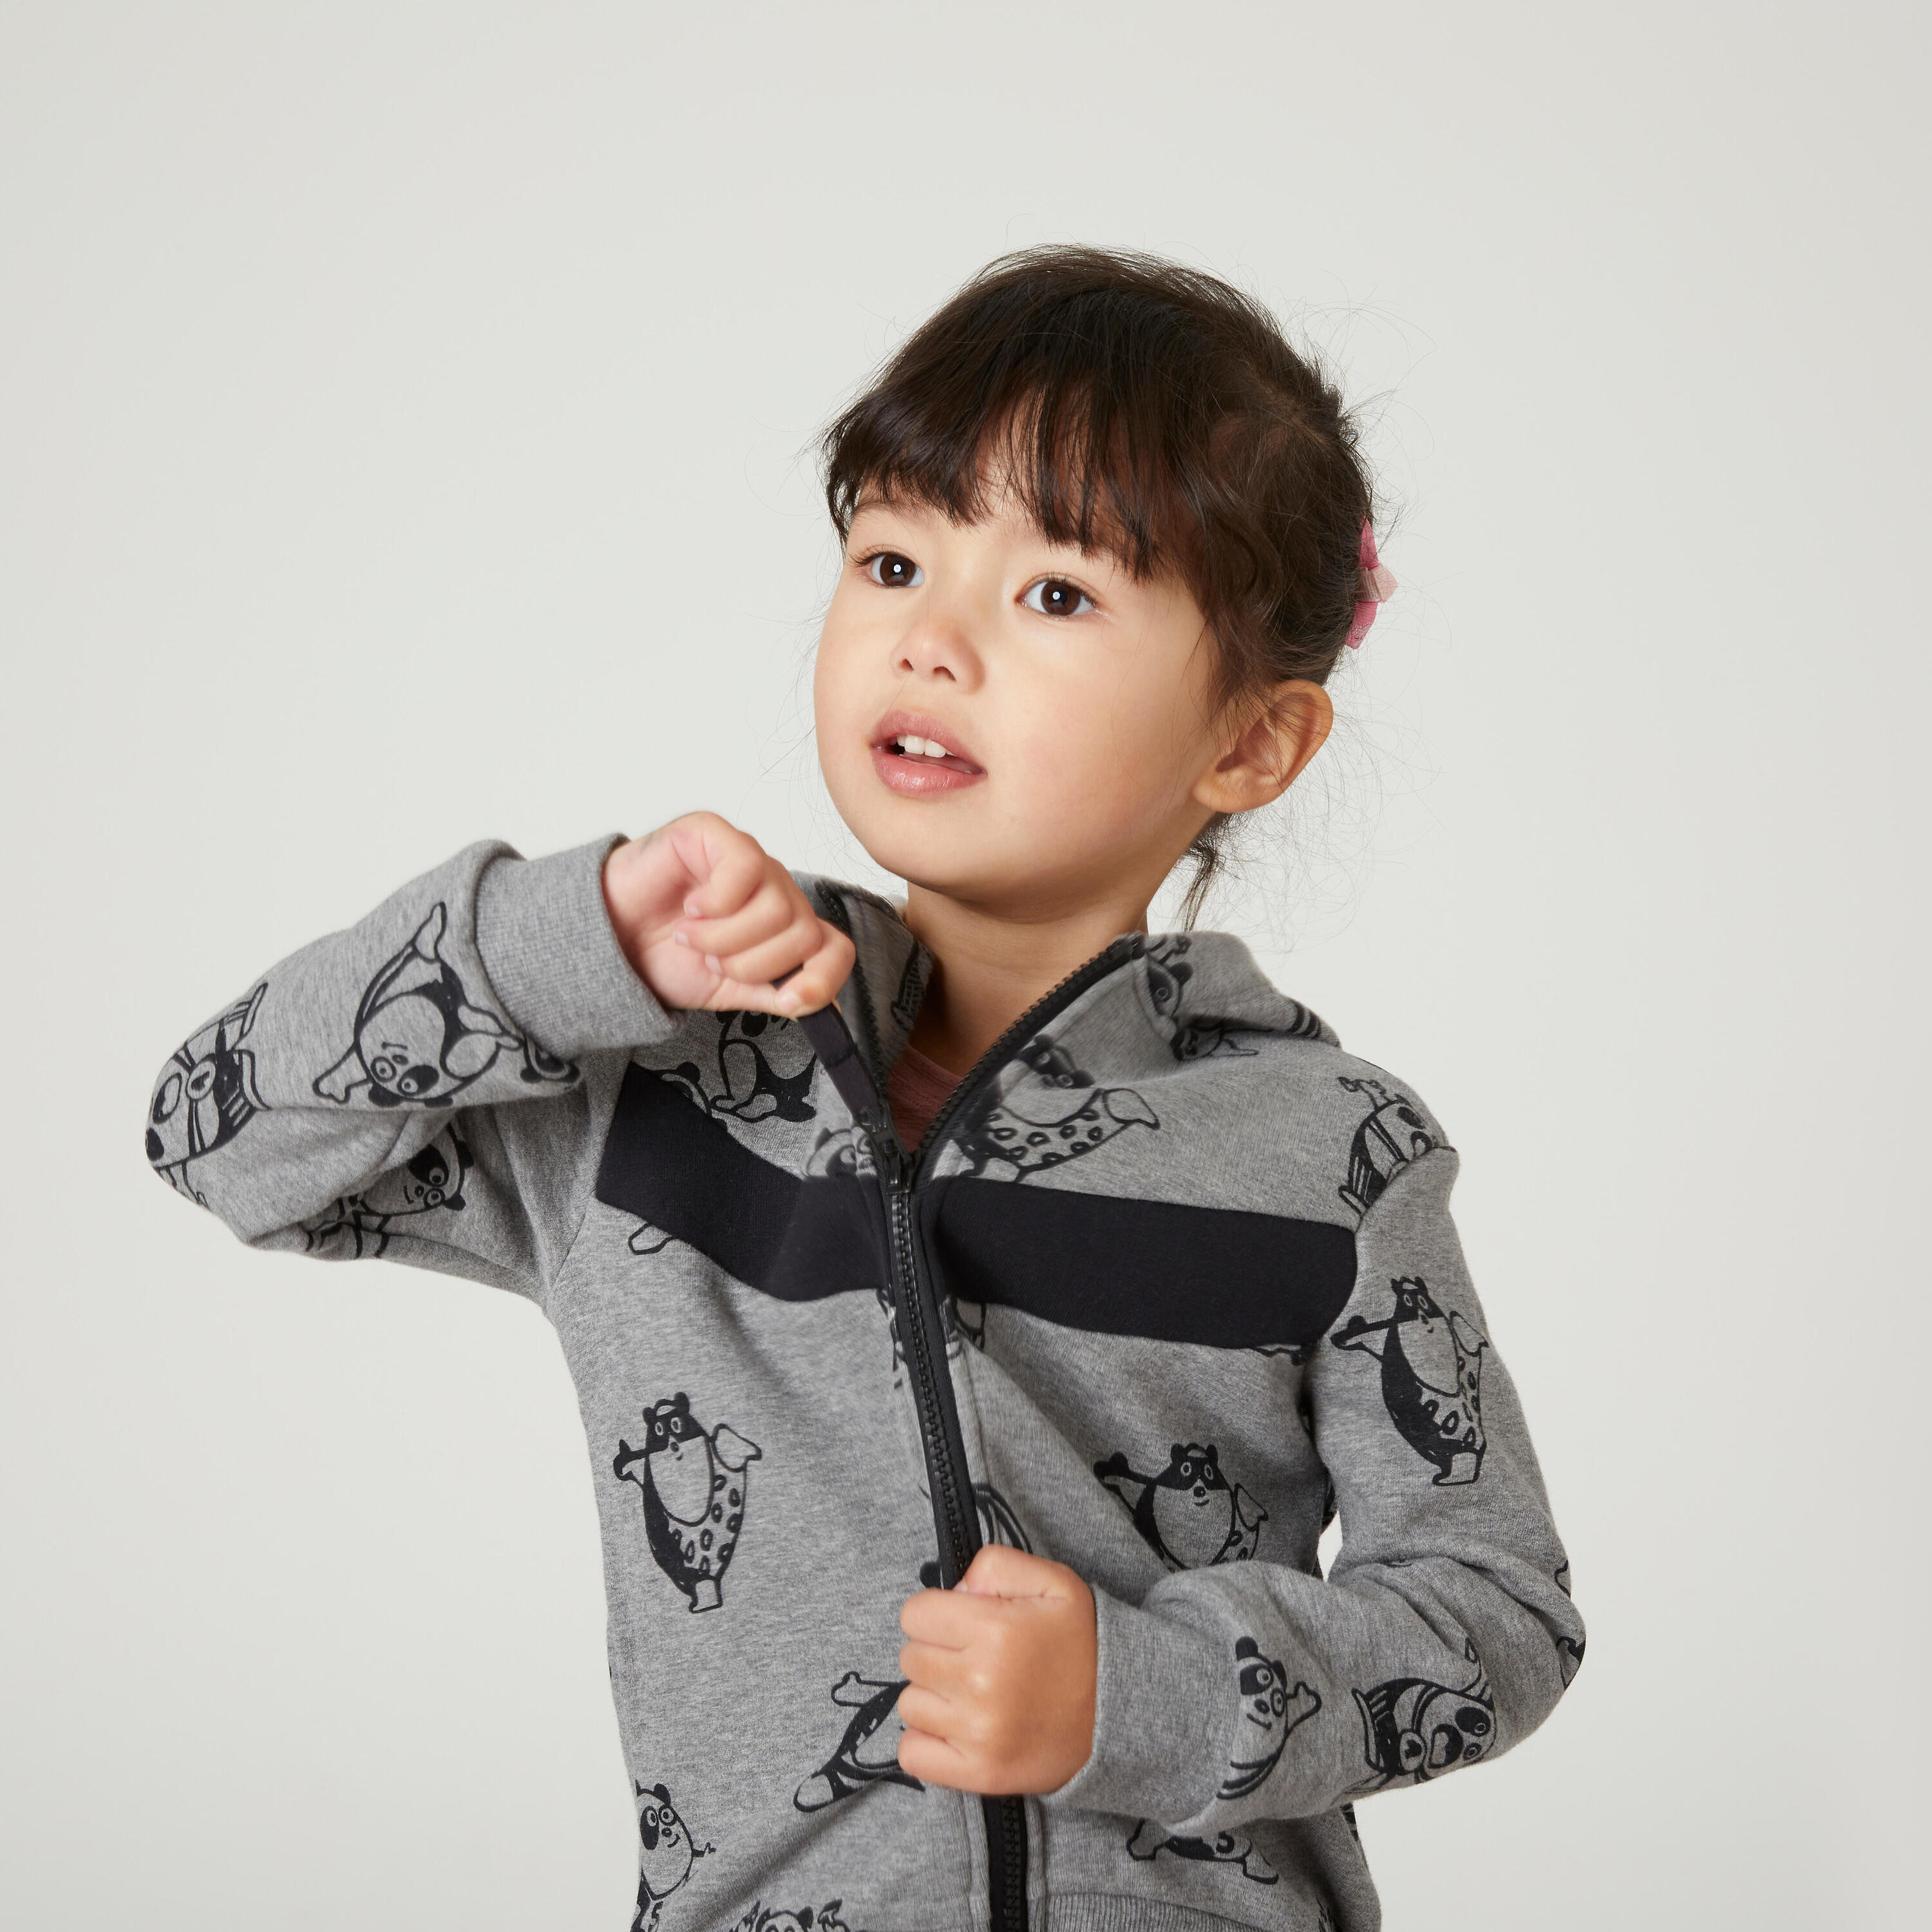 Baby's Basic Zip-Up Sweatshirt - Grey With Design 8/10